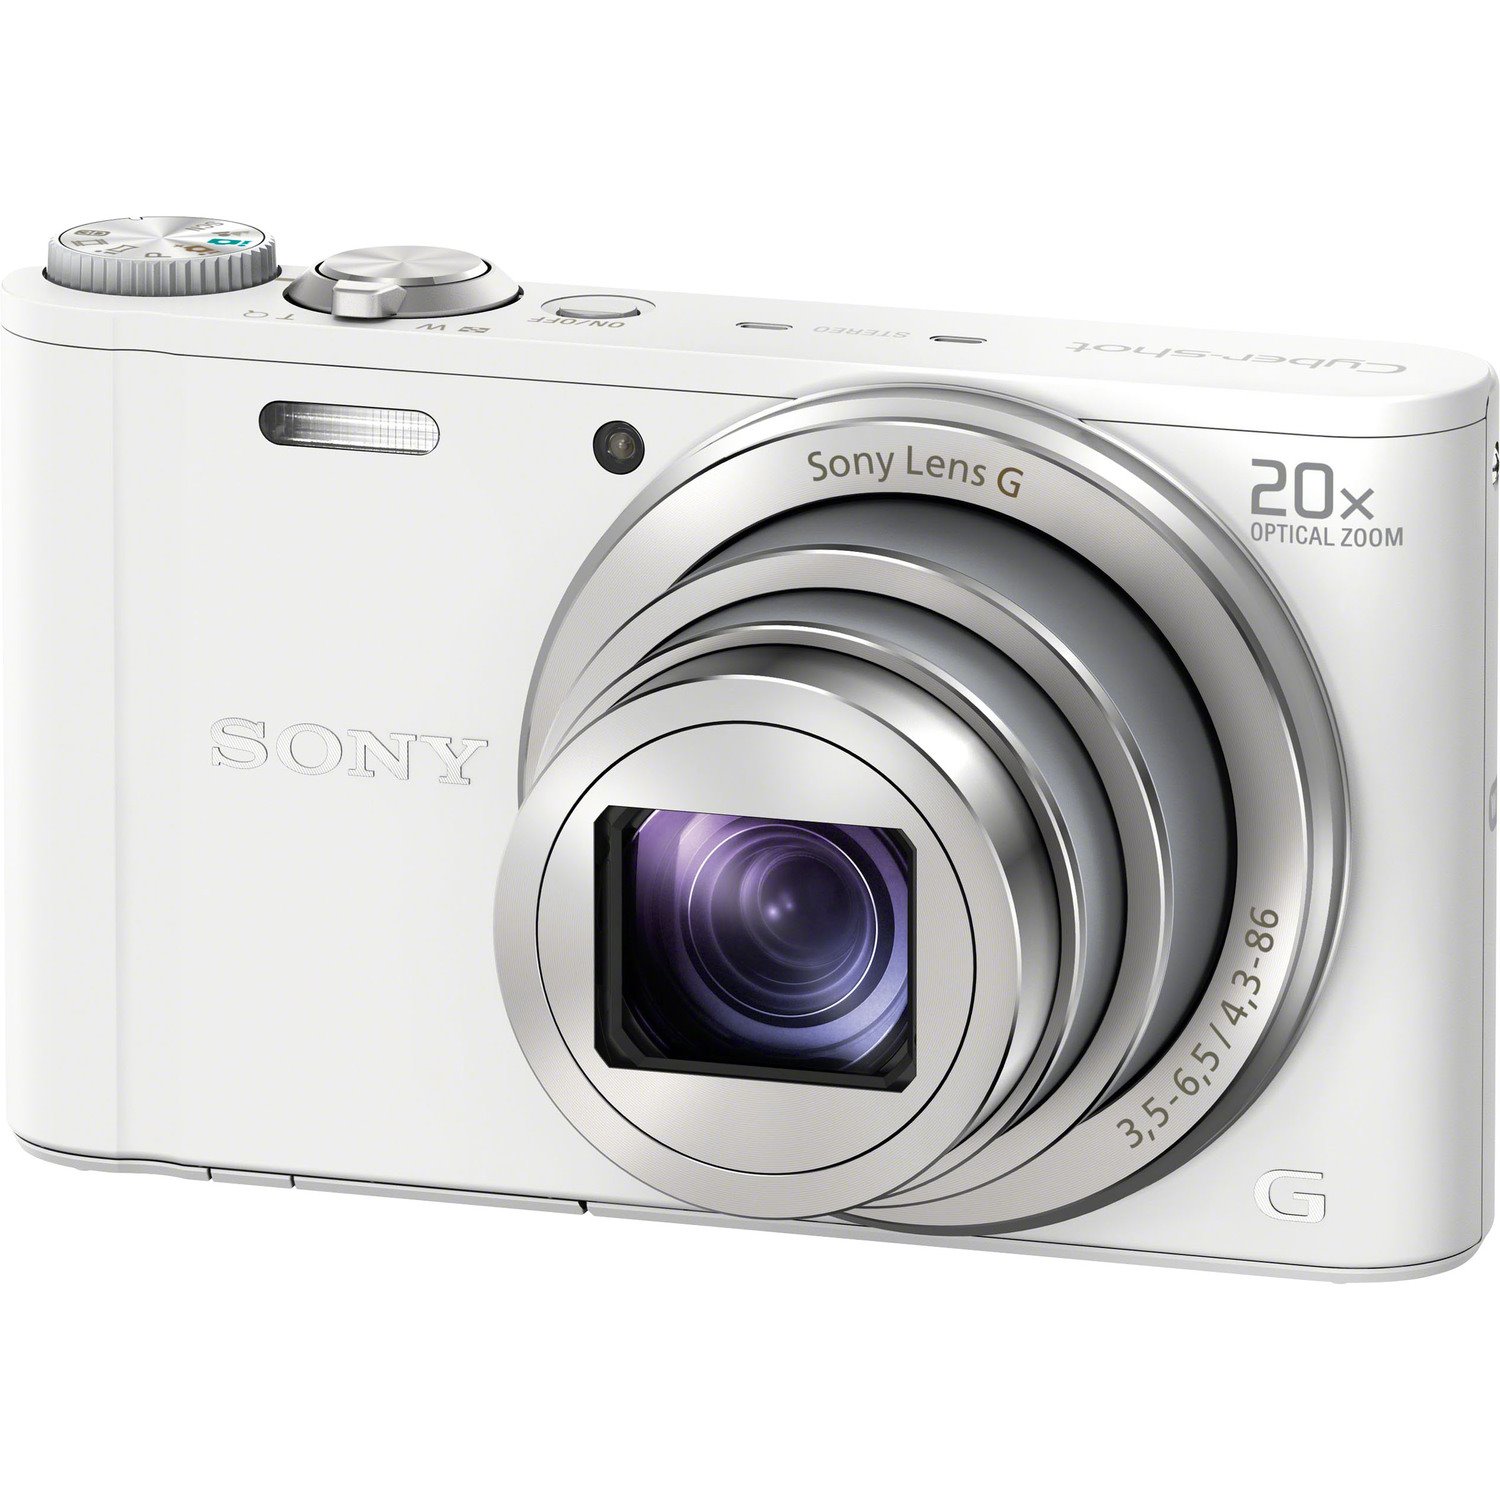 Sony Cyber-shot DSC-WX300 18.2 Megapixel Compact Camera - White